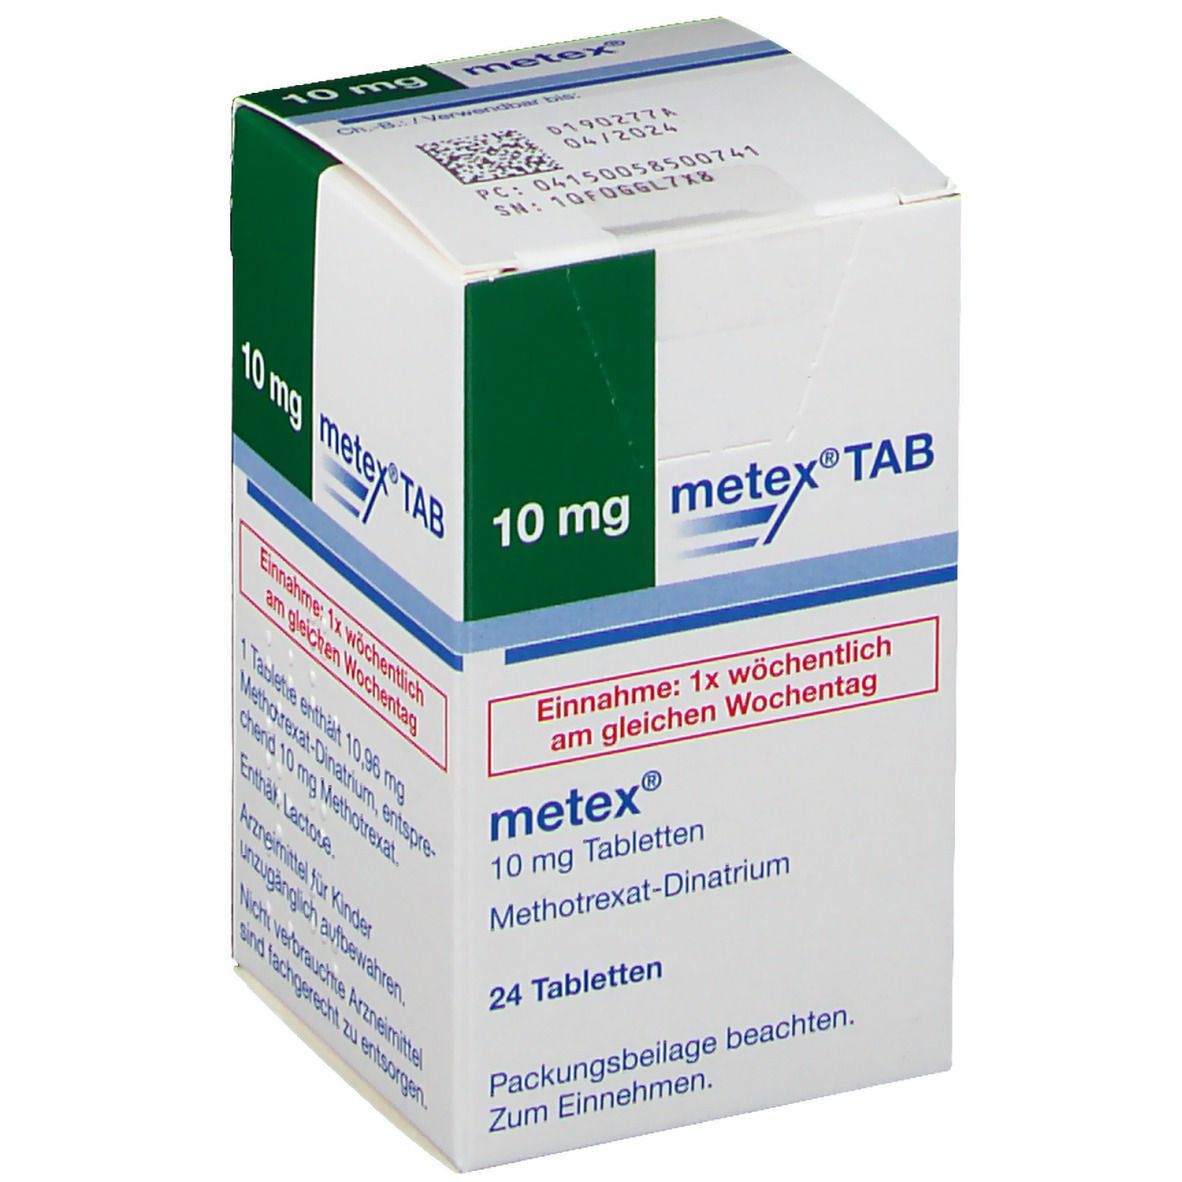 metex® 10 mg